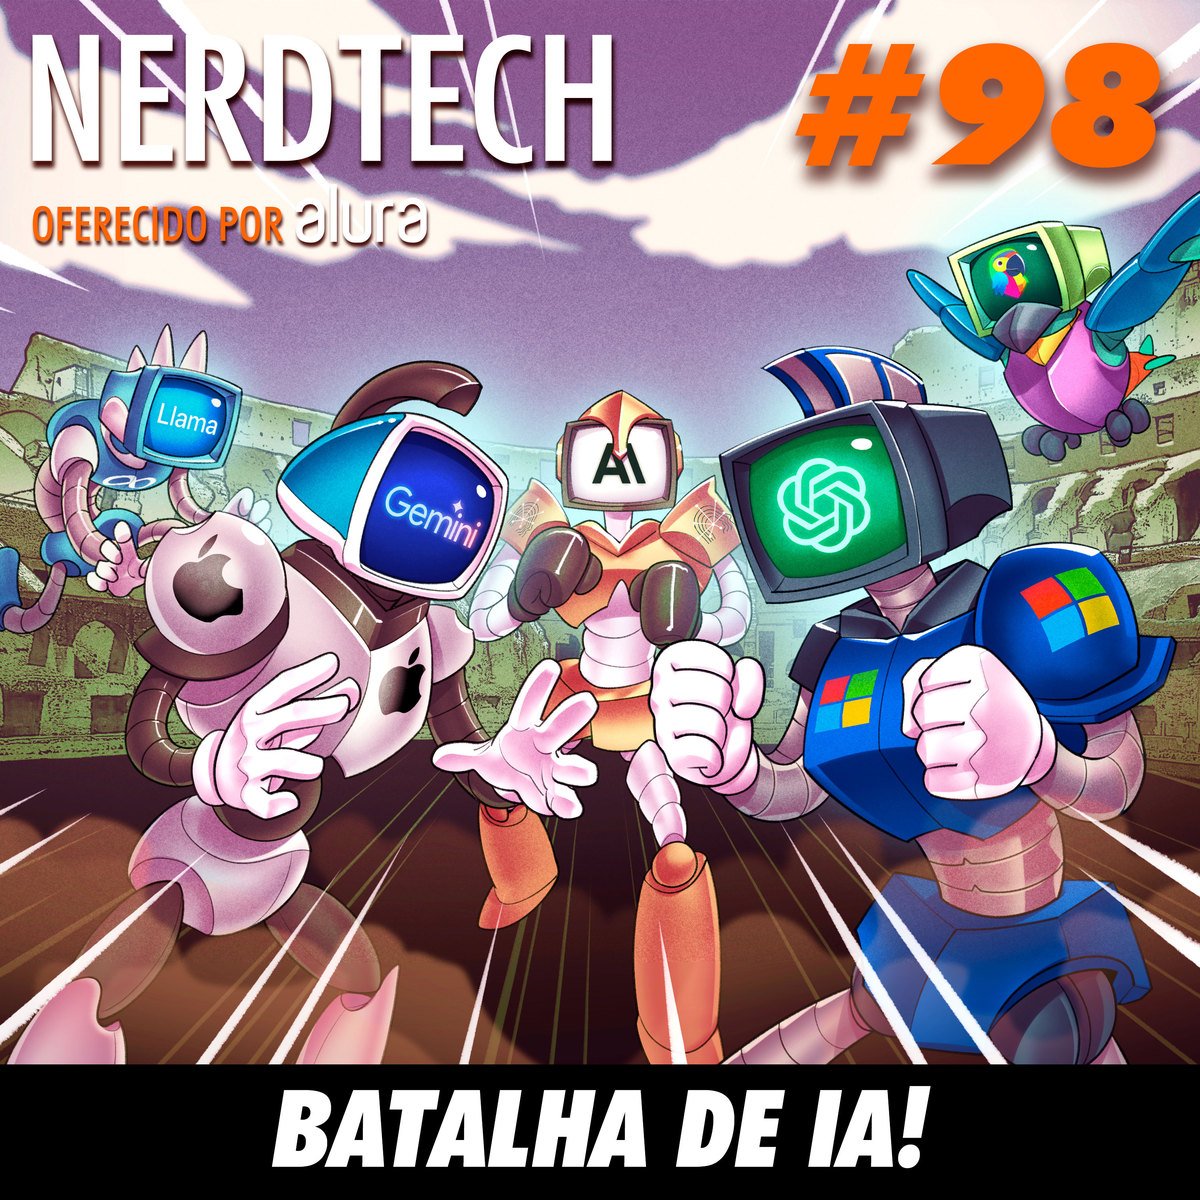 NerdTech 98 - Batalha de IA!